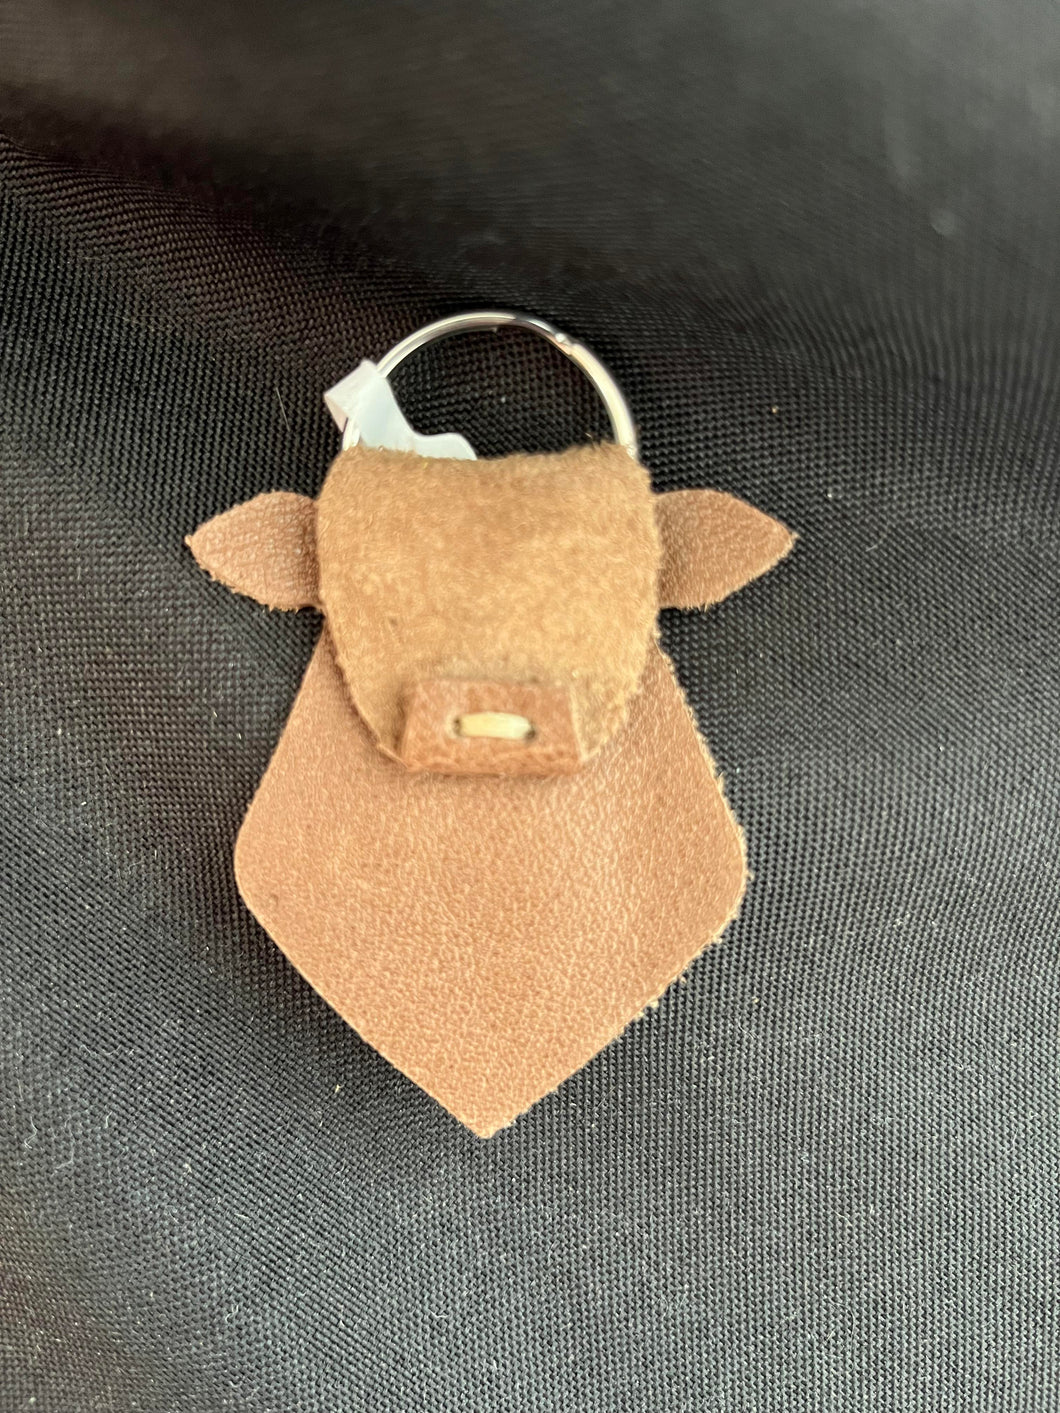 Cow Keychain Cut Template